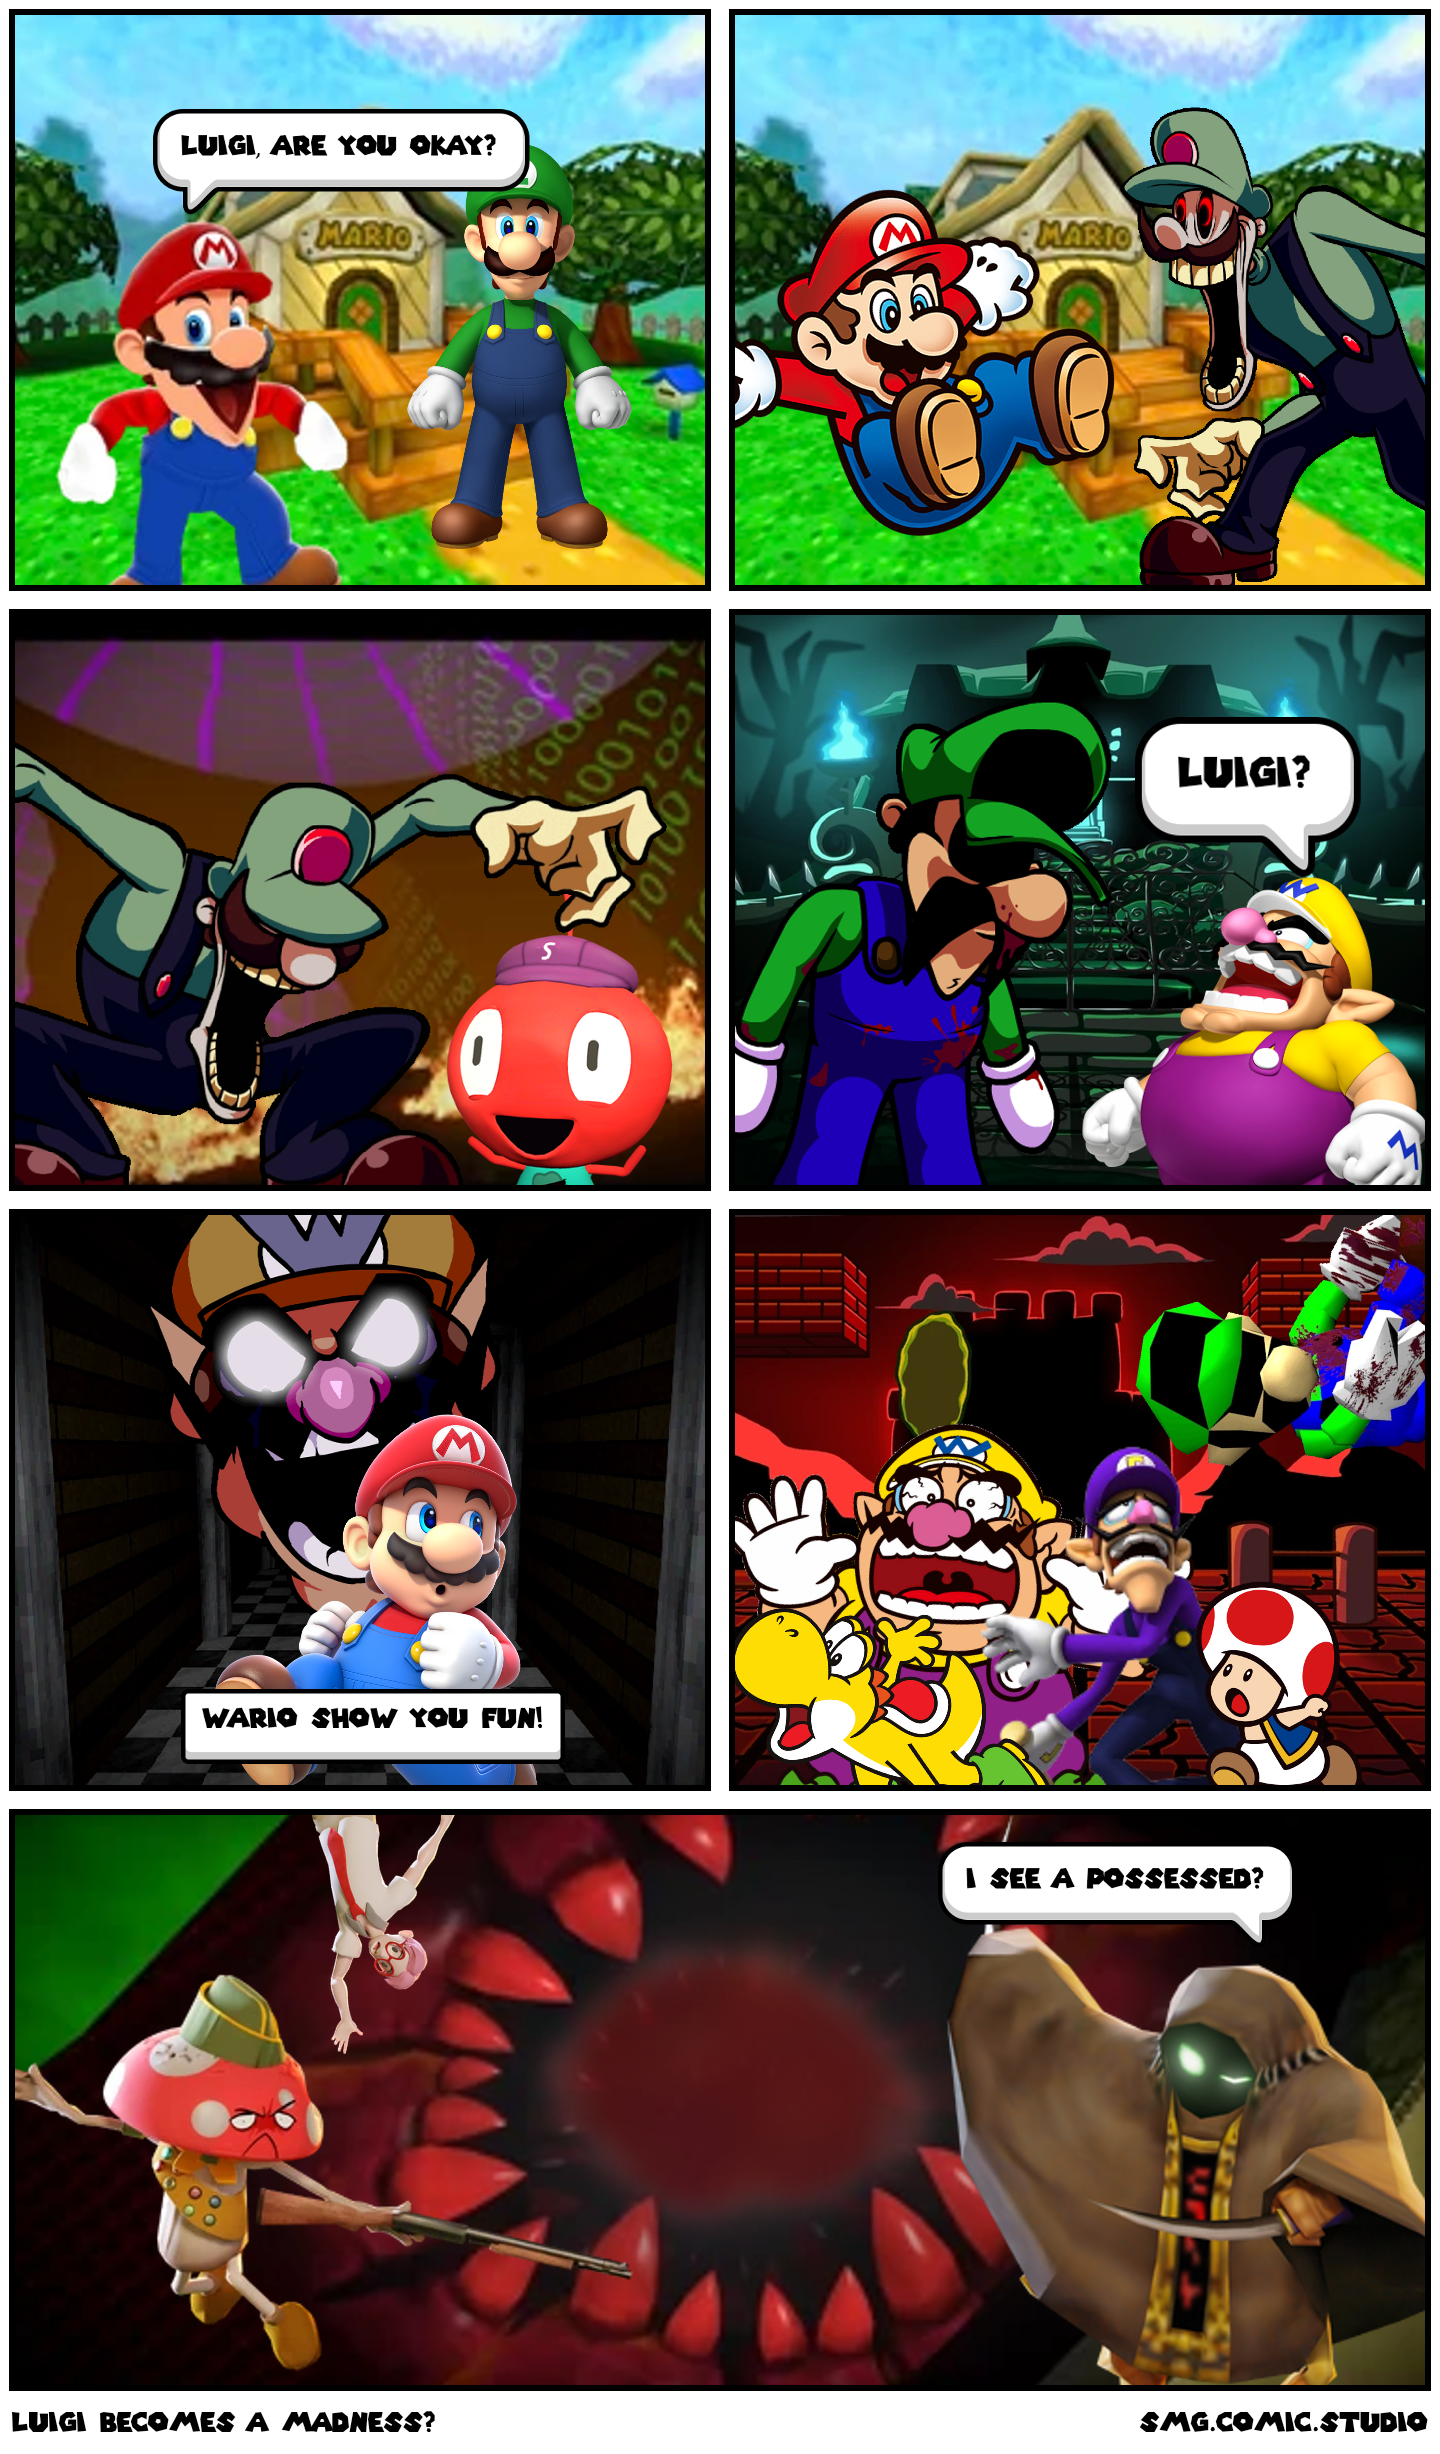 Luigi becomes a madness?